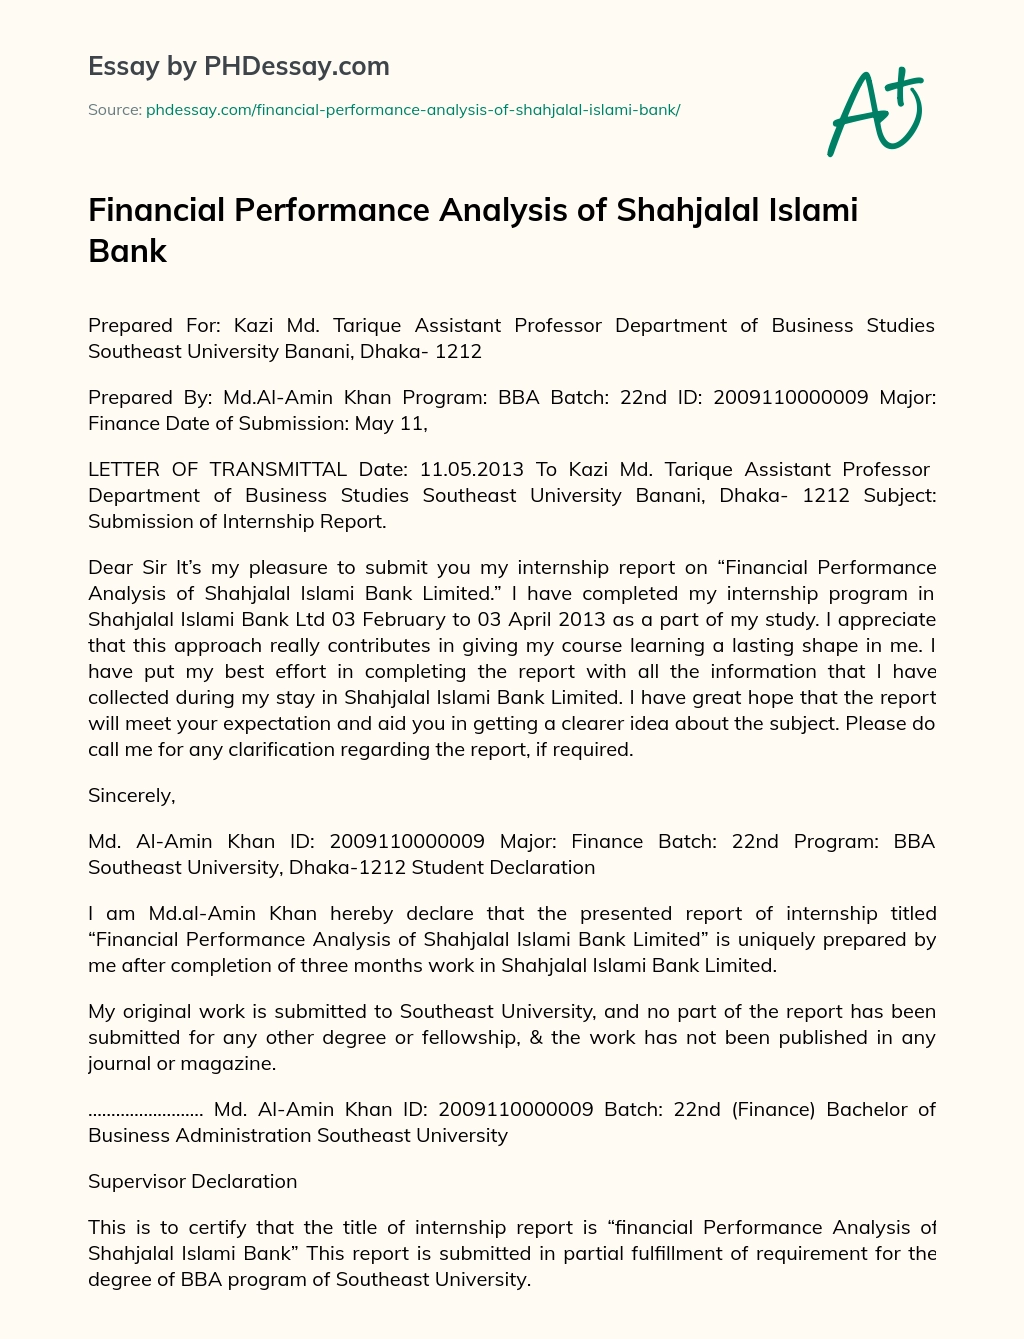 Financial Performance Analysis of Shahjalal Islami Bank essay